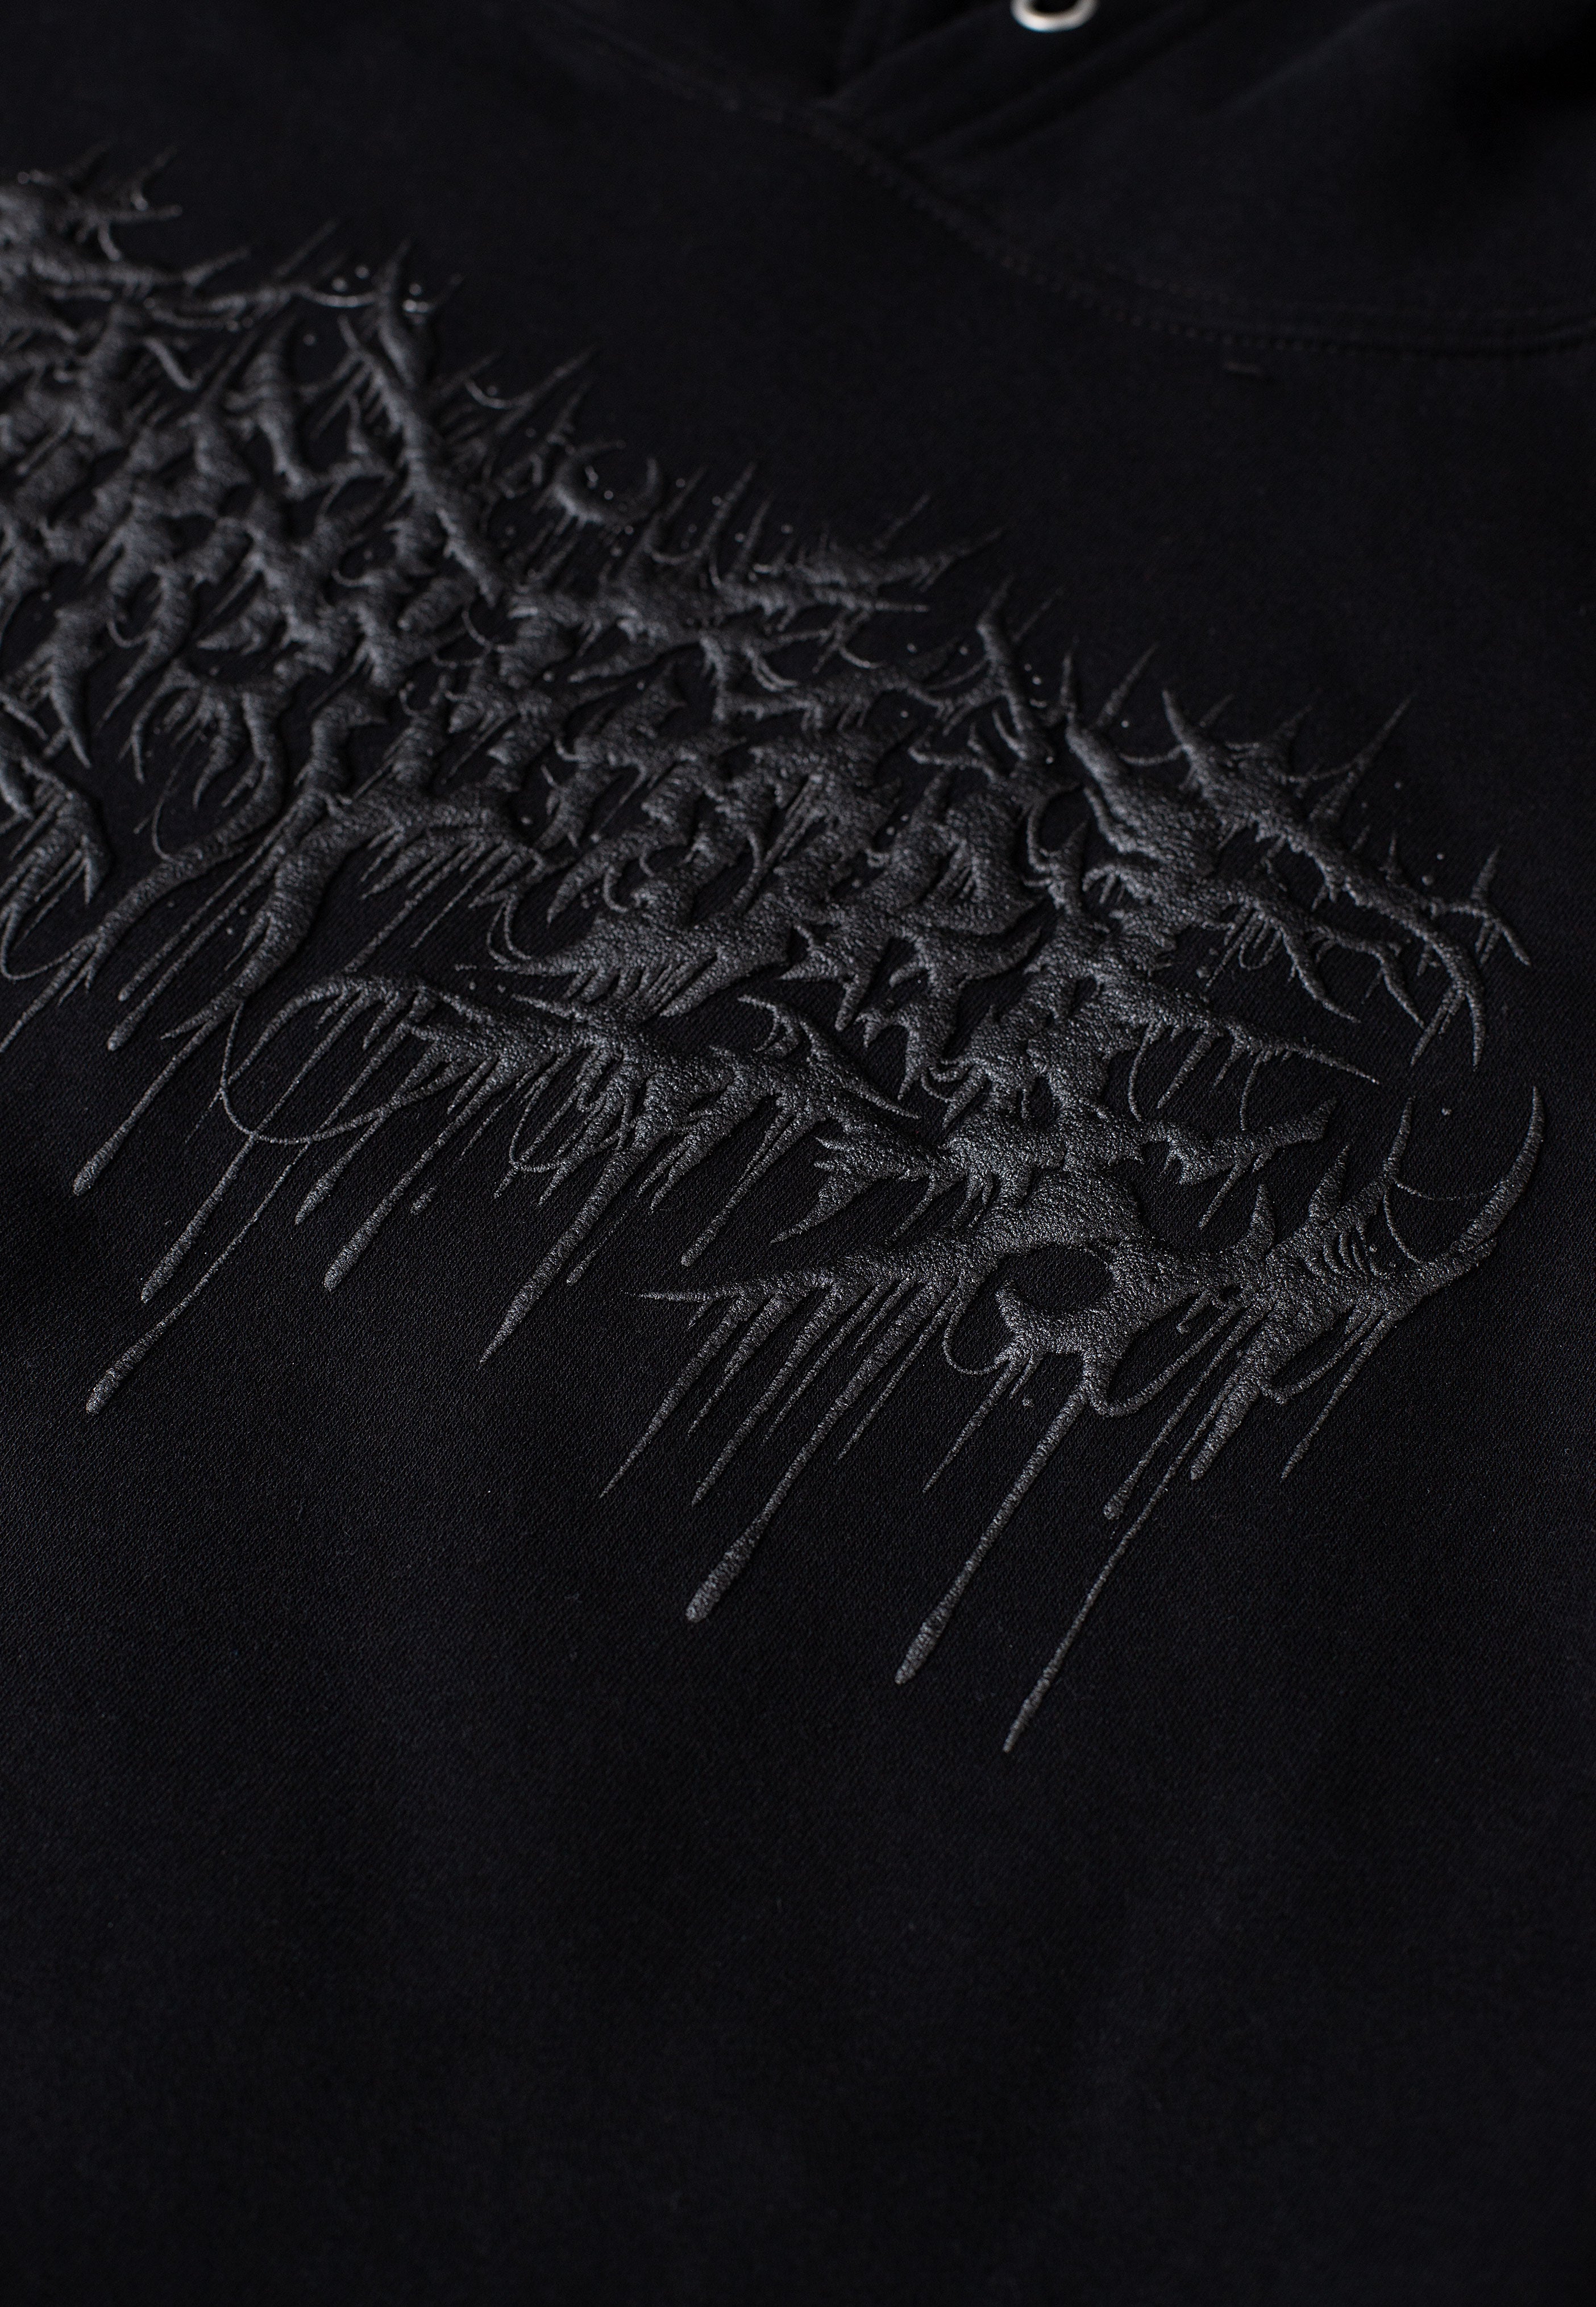 Lorna Shore - Pain Remains Limited Black On Black - T-Shirt | Men-Image